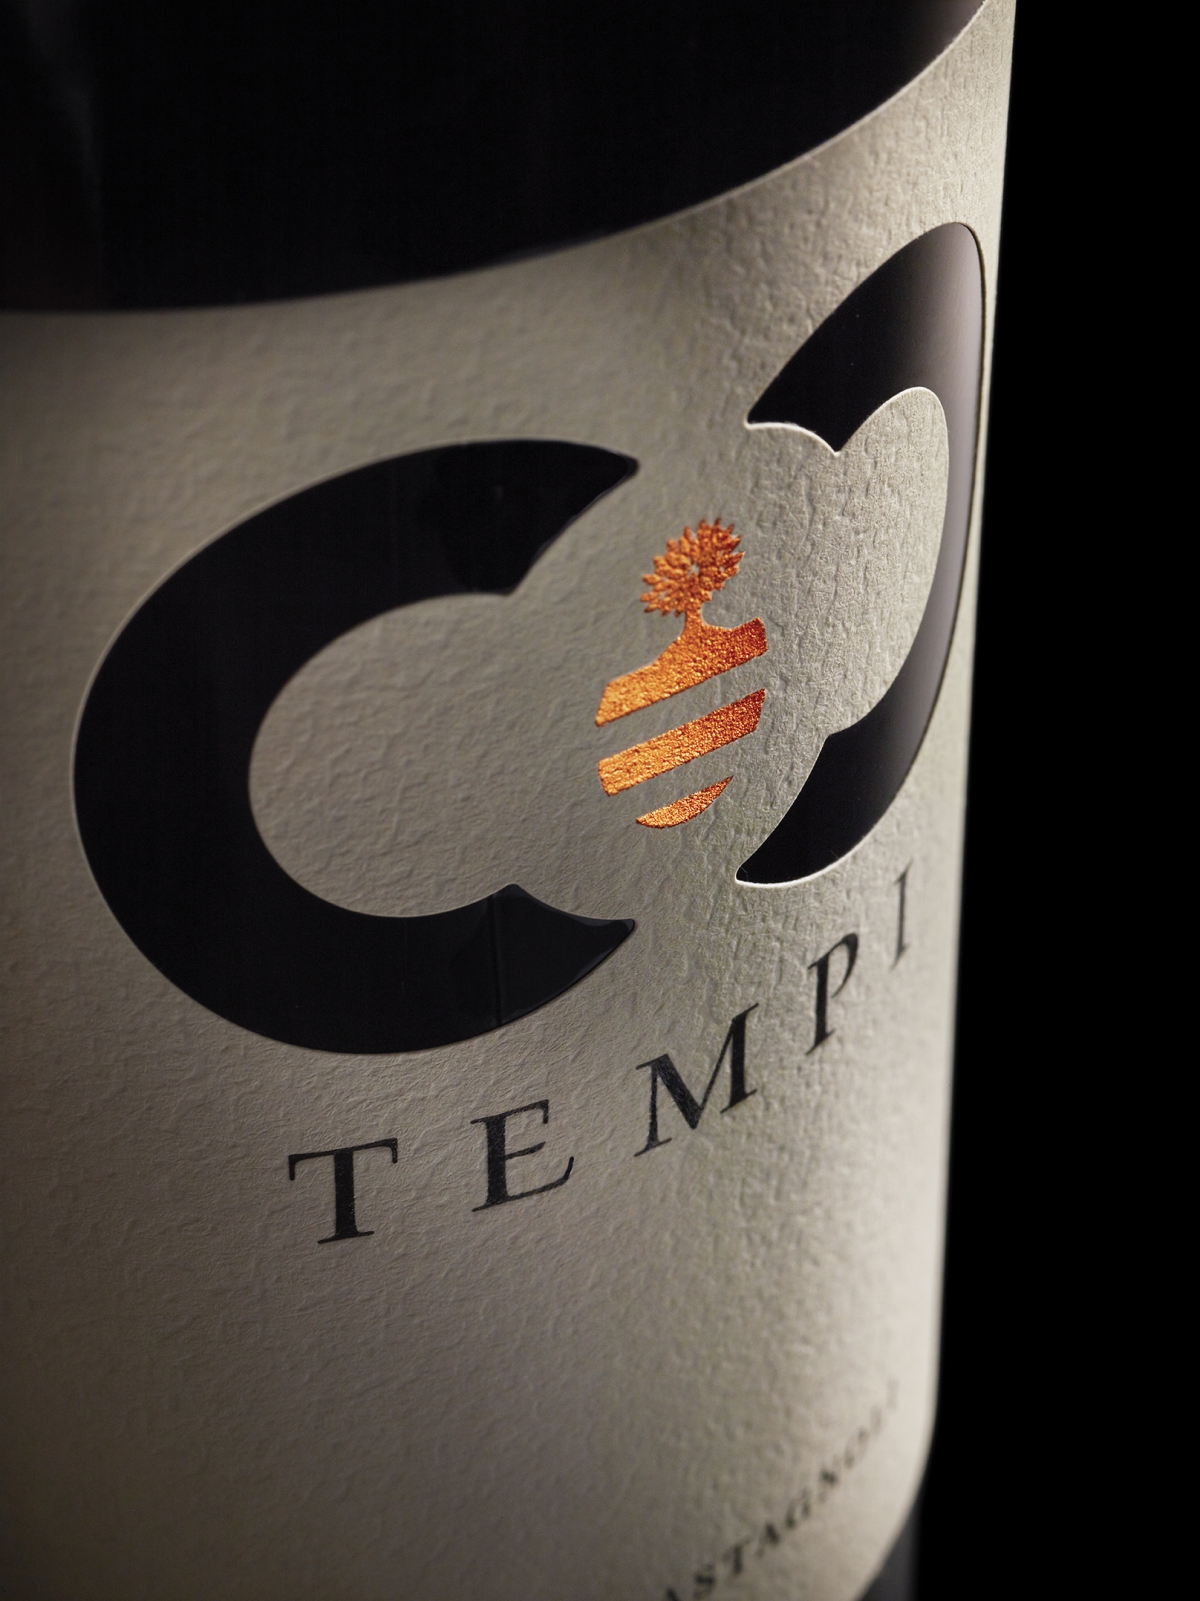 Tempi and Nottetempi Premium Wines Packaging Design